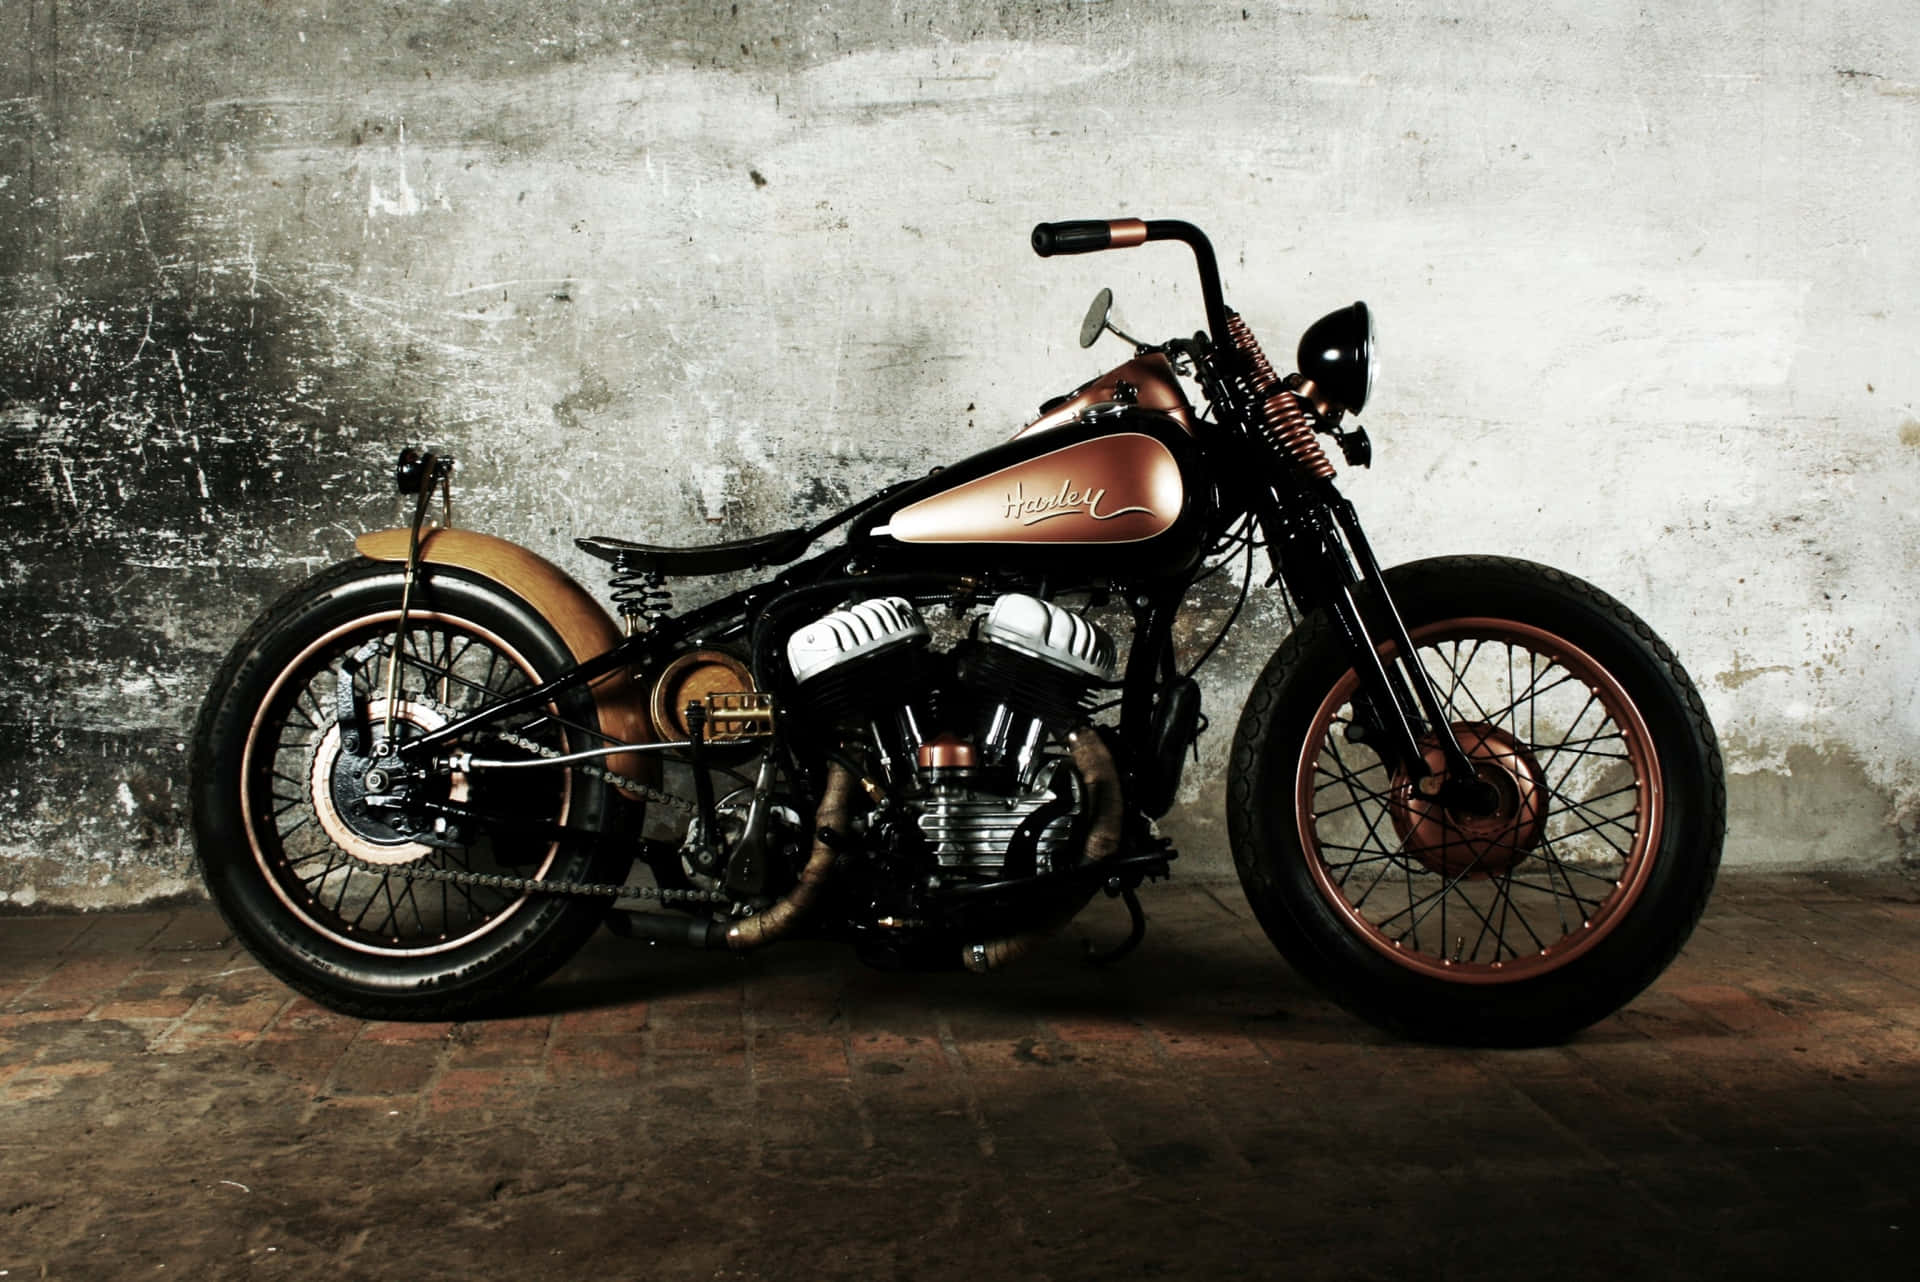 Harley Davidson Low Rider BS6 Motor Background